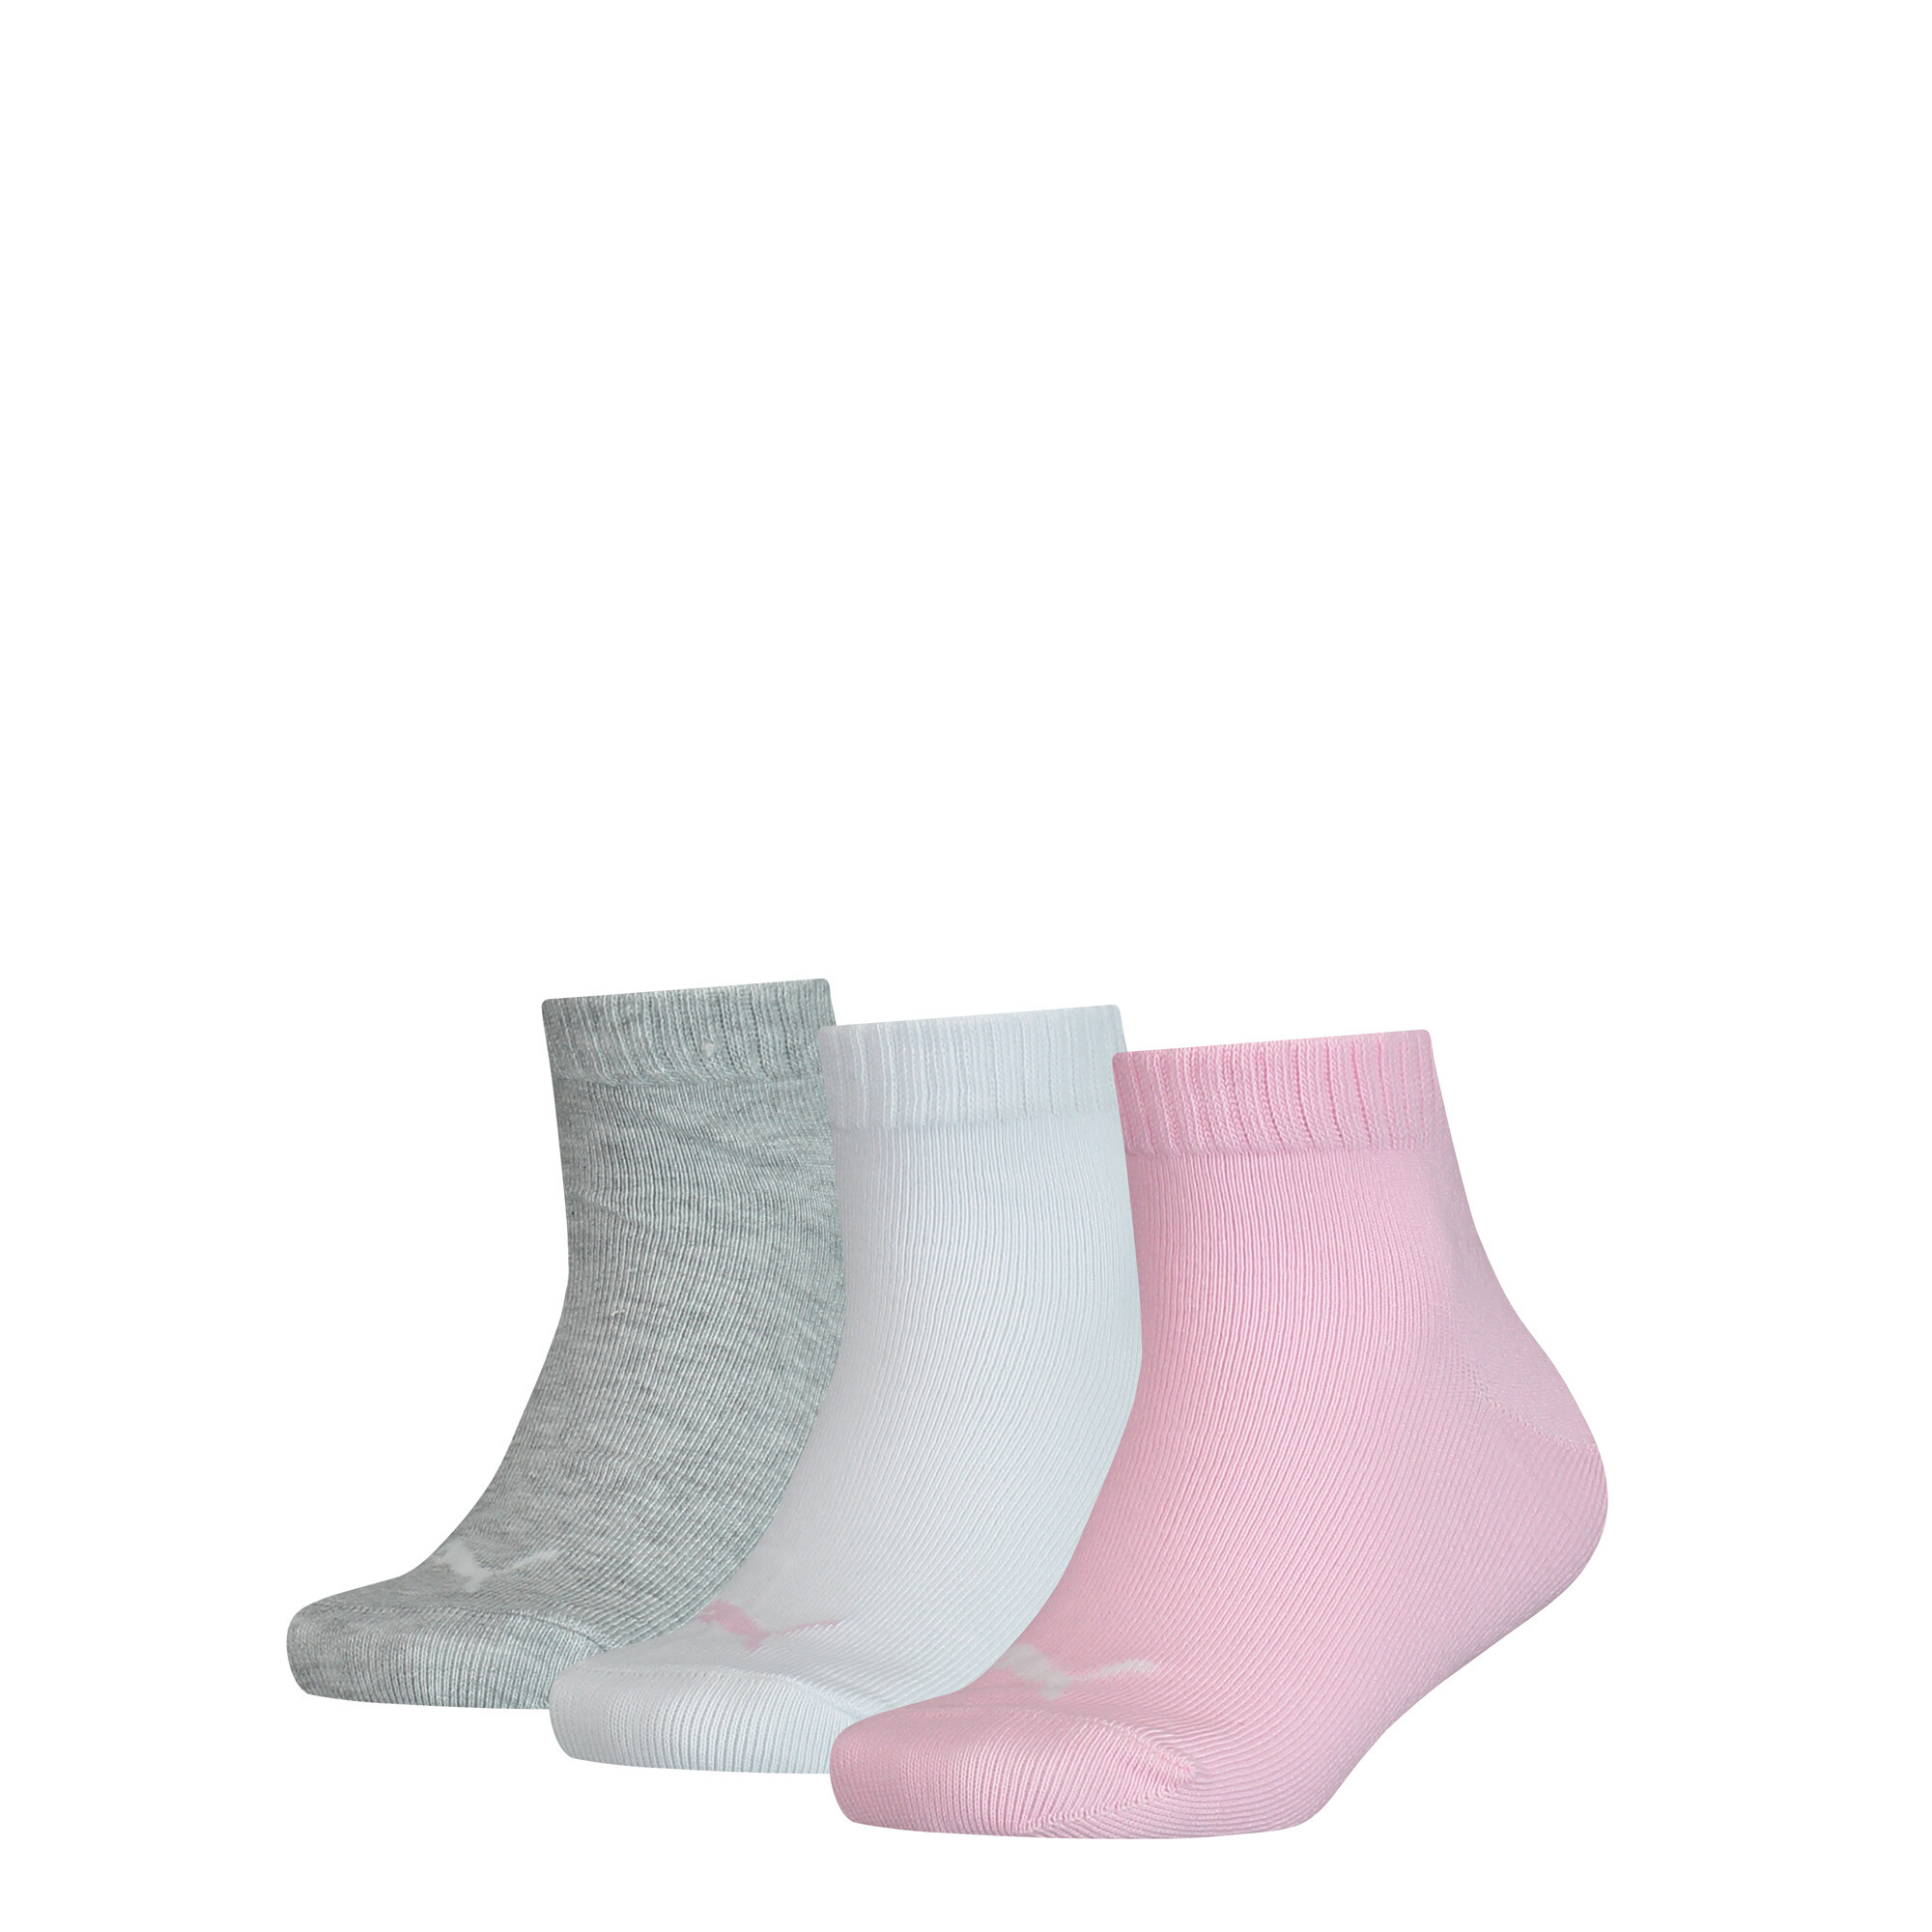 Kids' PUMA Quarter Socks 3 Pack In Pink, Size 27-30